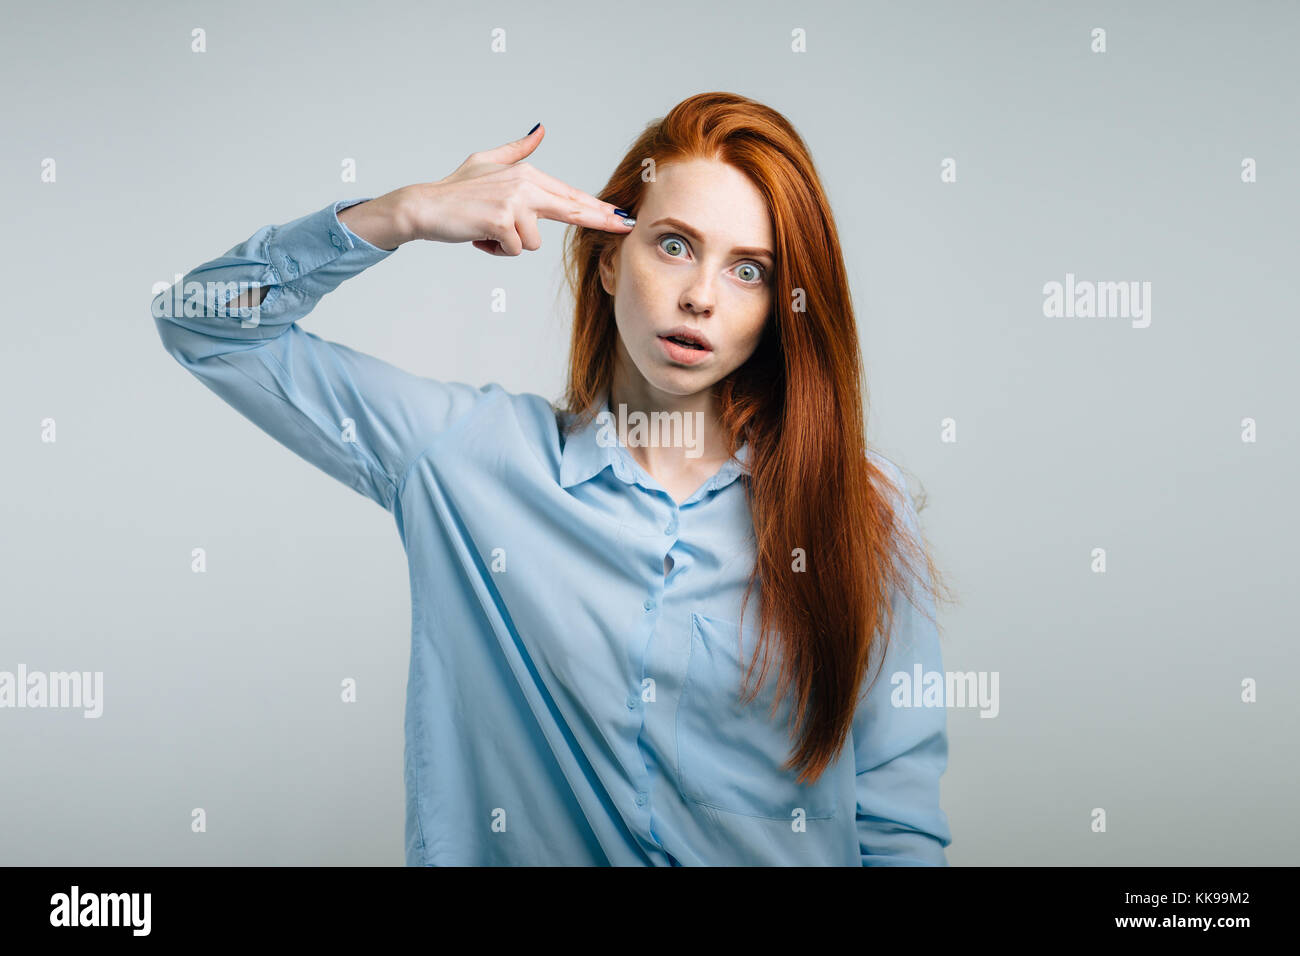 Finger Gun Stock Photos - 32,793 Images | Shutterstock